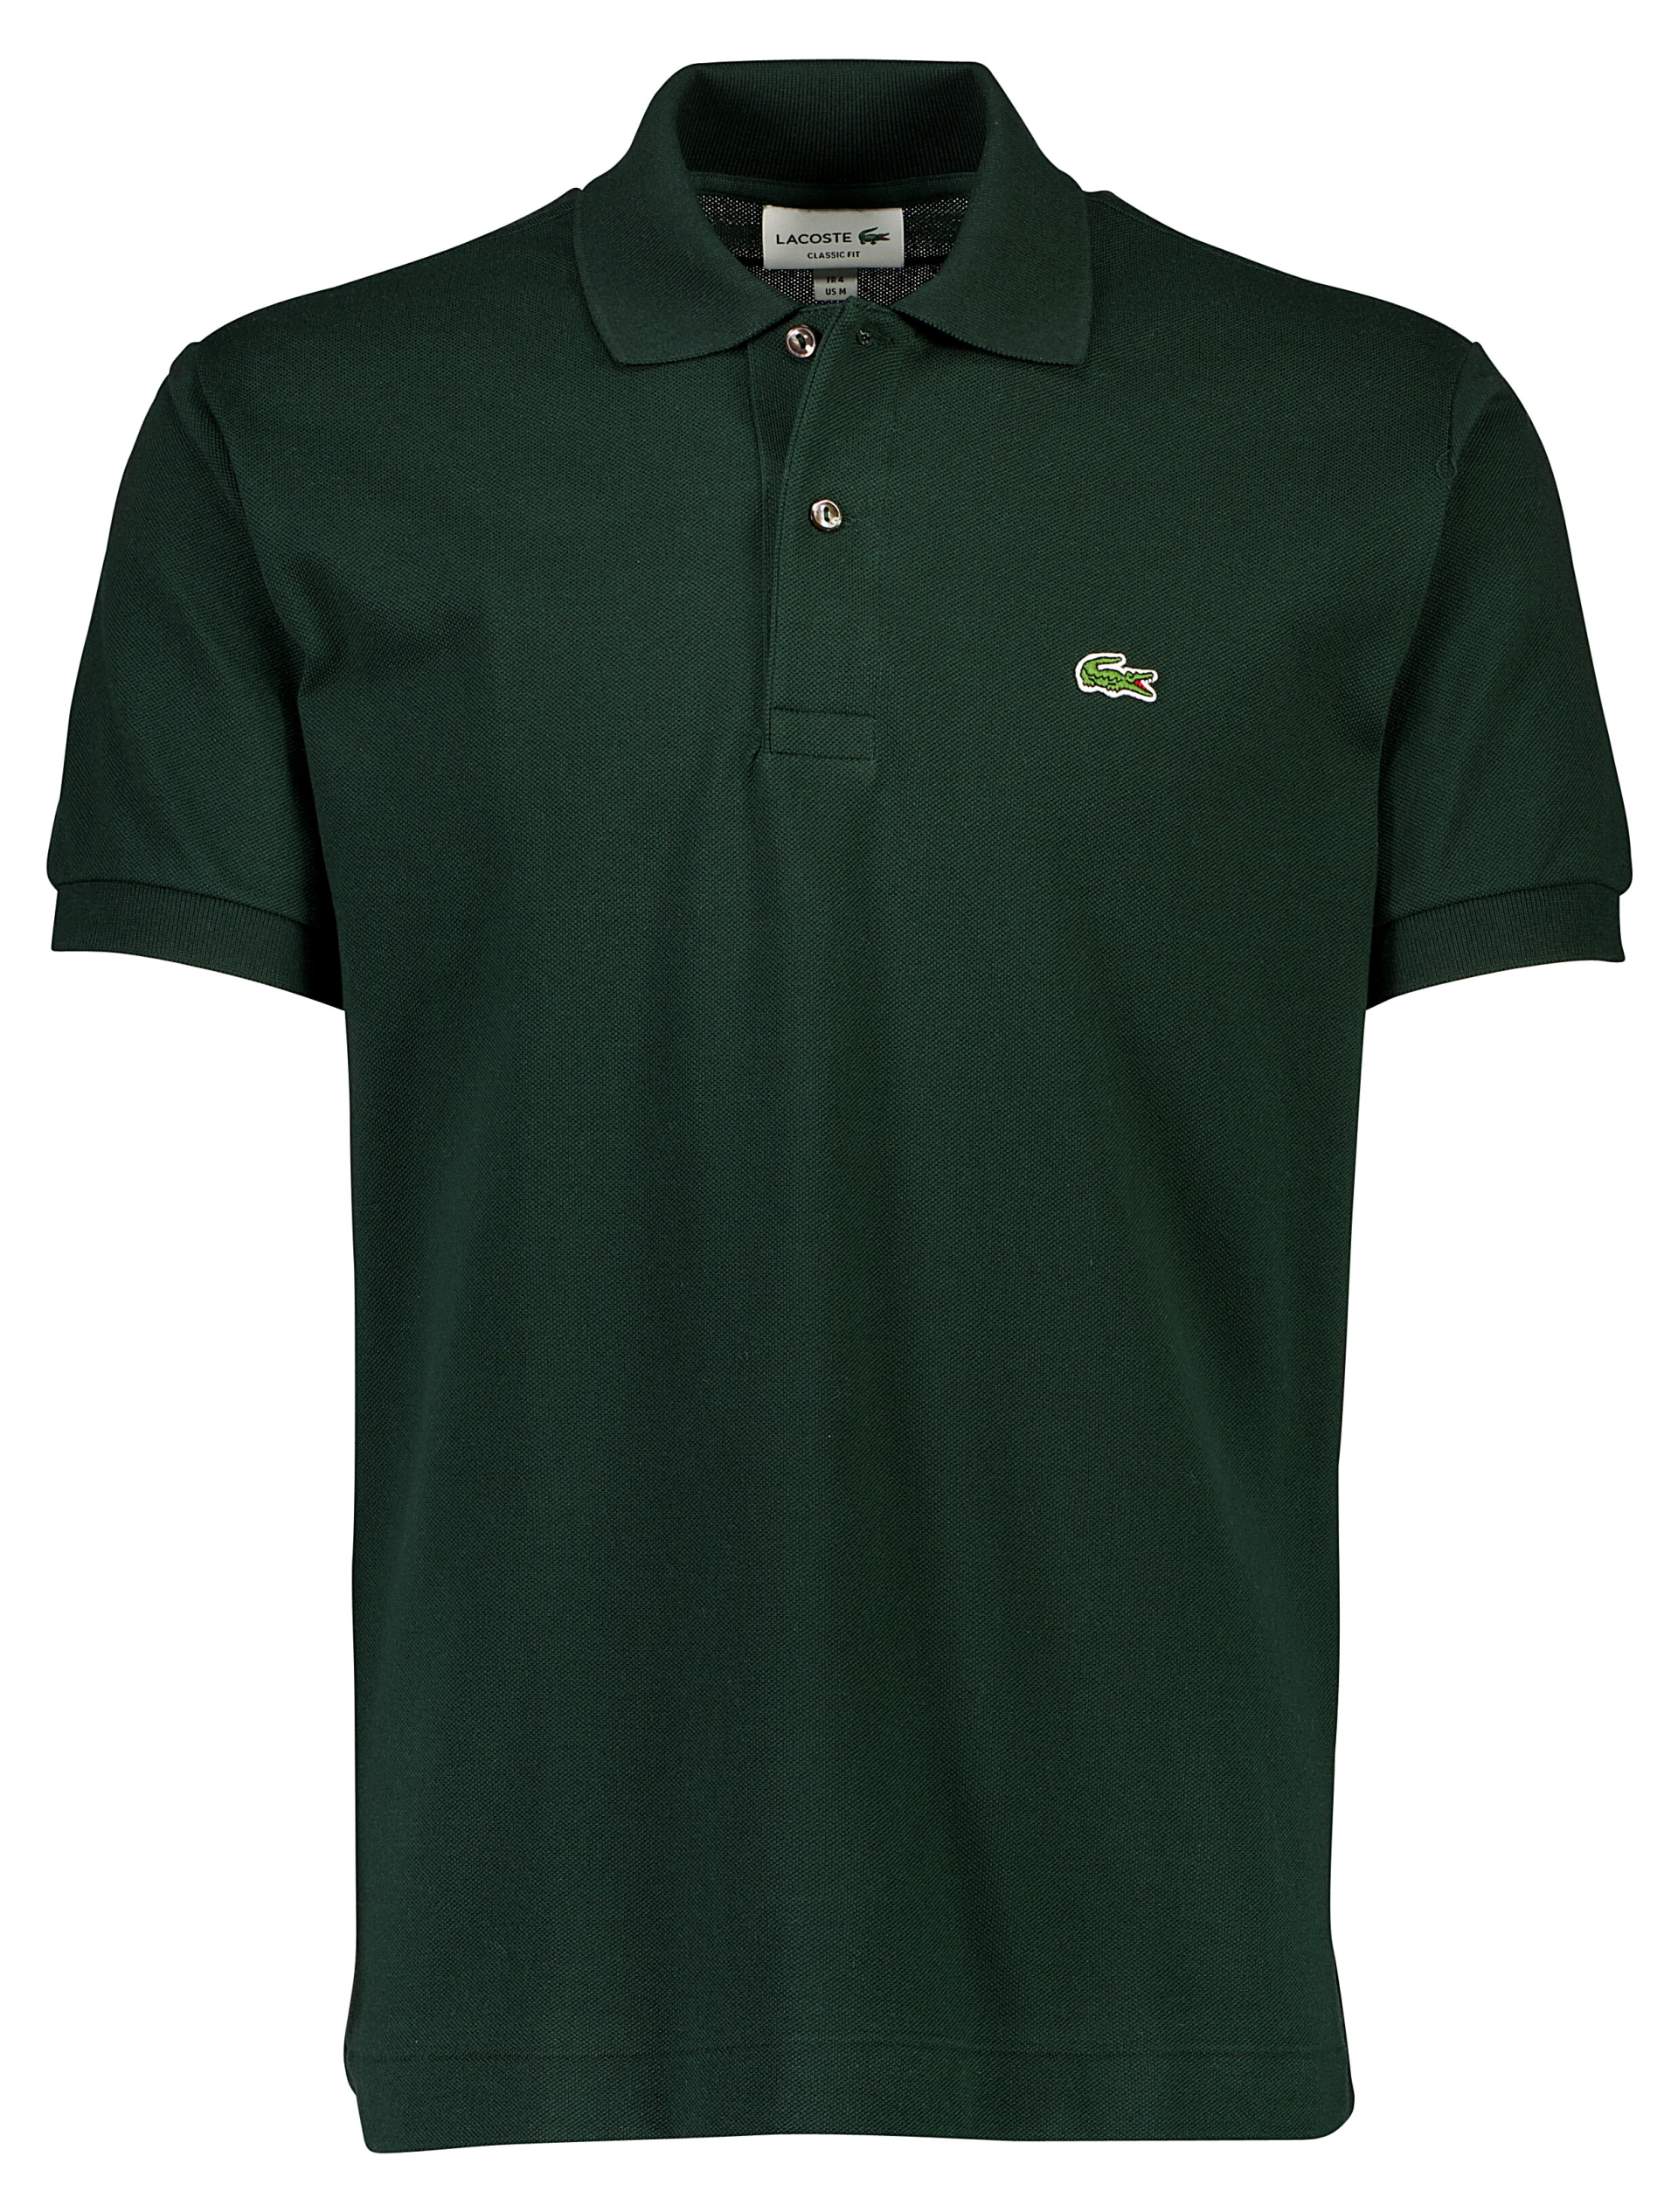 Lacoste Poloshirt grøn / yzp green